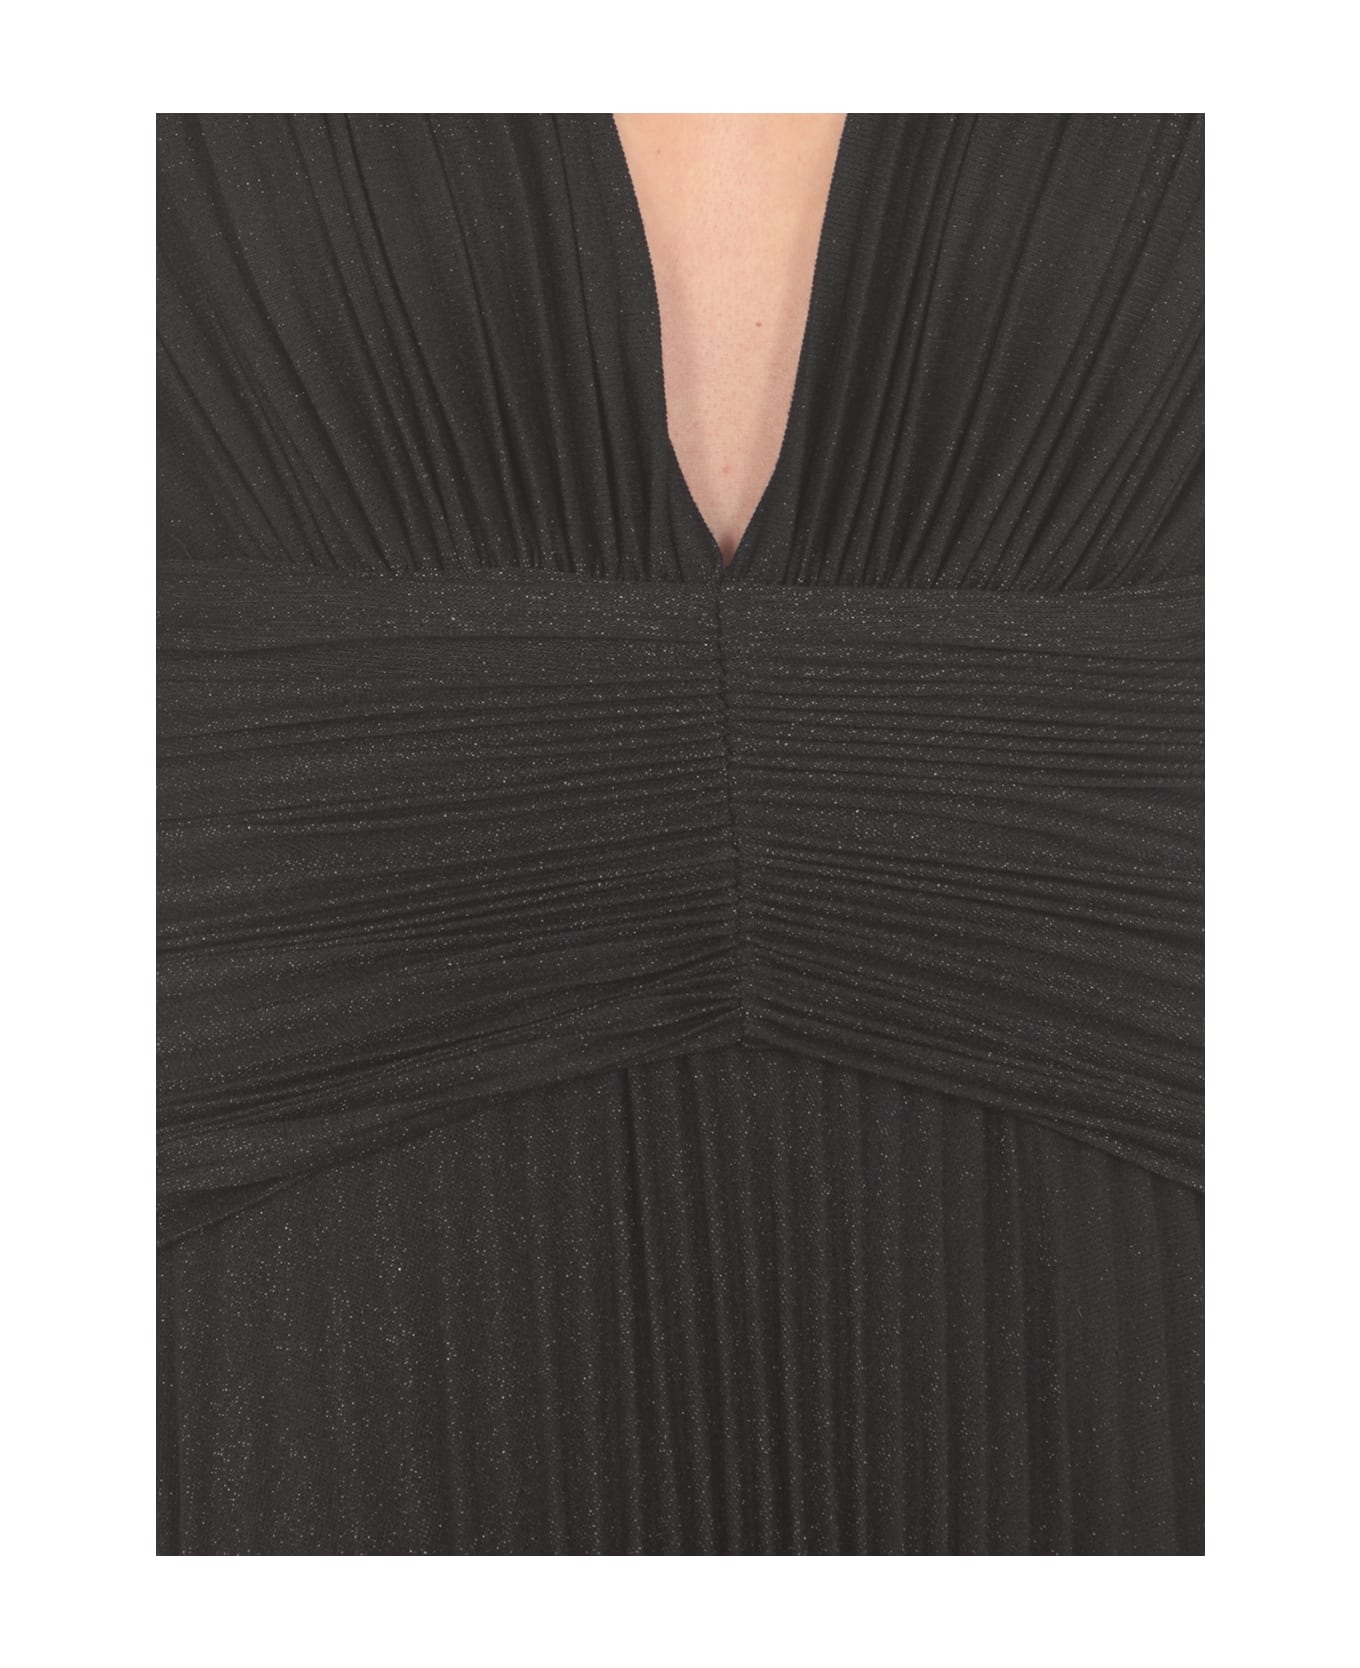 Elisabetta Franchi Red Carpet Lurex Jersey Dress With Necklace - Black